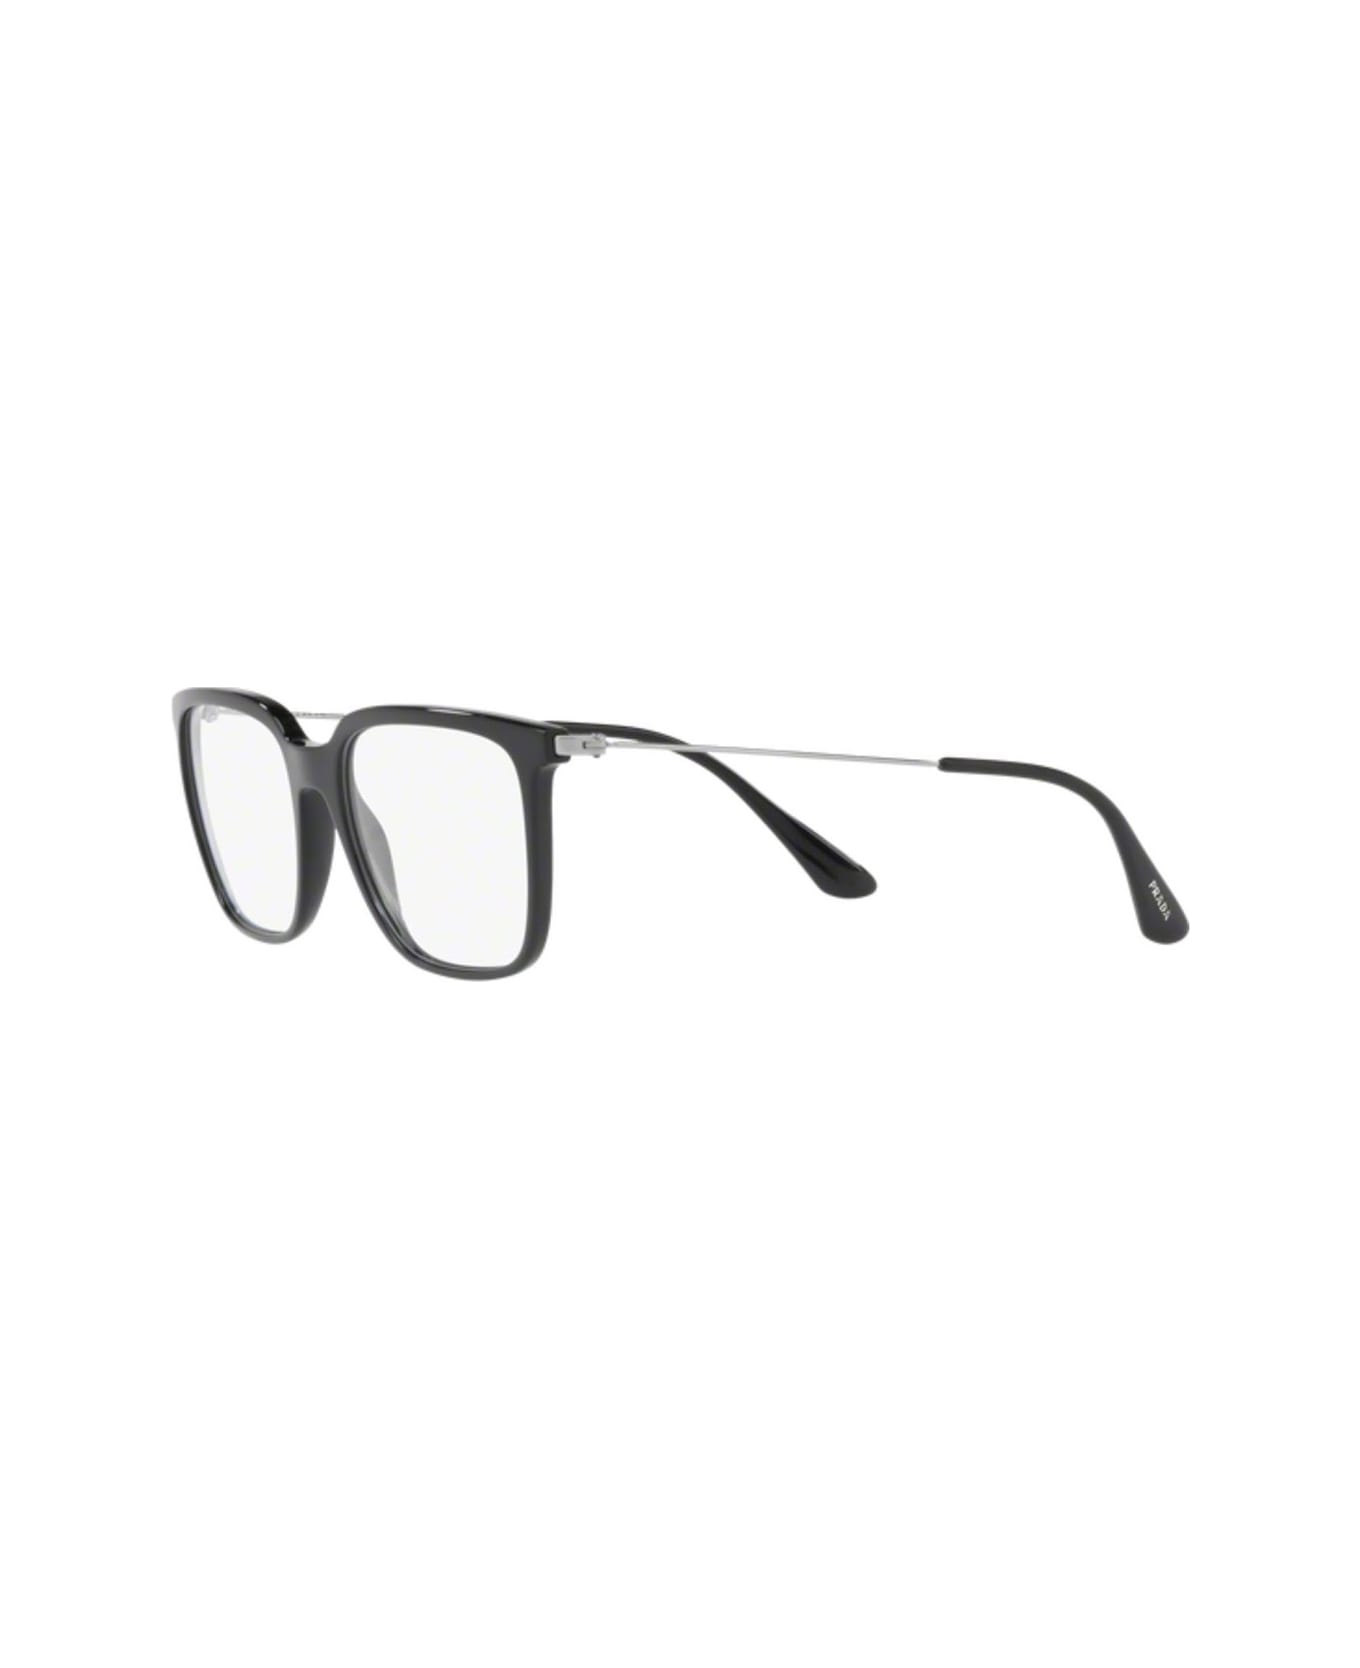 Prada Eyewear Pr 17tv Glasses - Nero